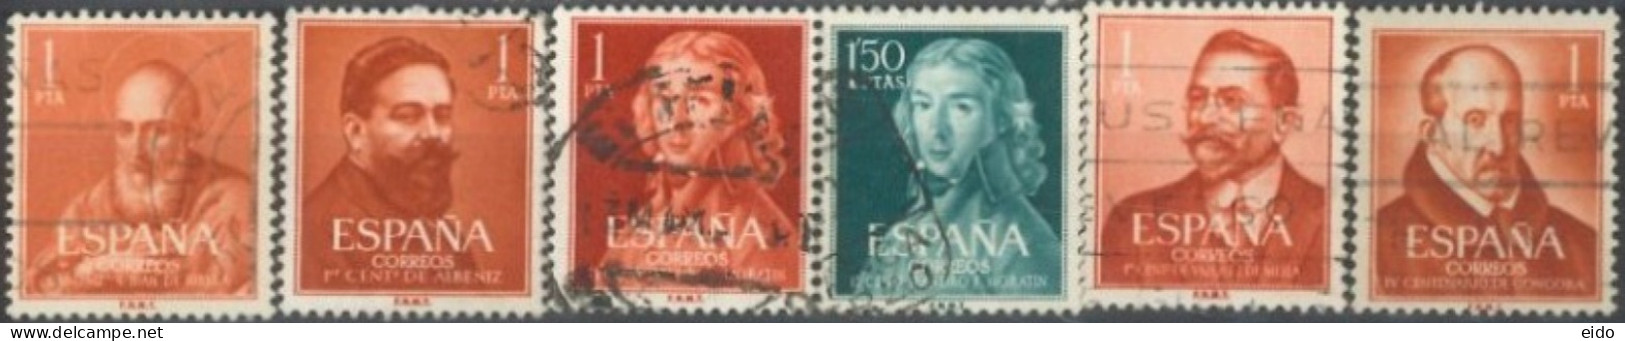 SPAIN, 1960/61, SAINTS & CELEBRITIES STAMPS SET OF 6, USED. - Gebruikt